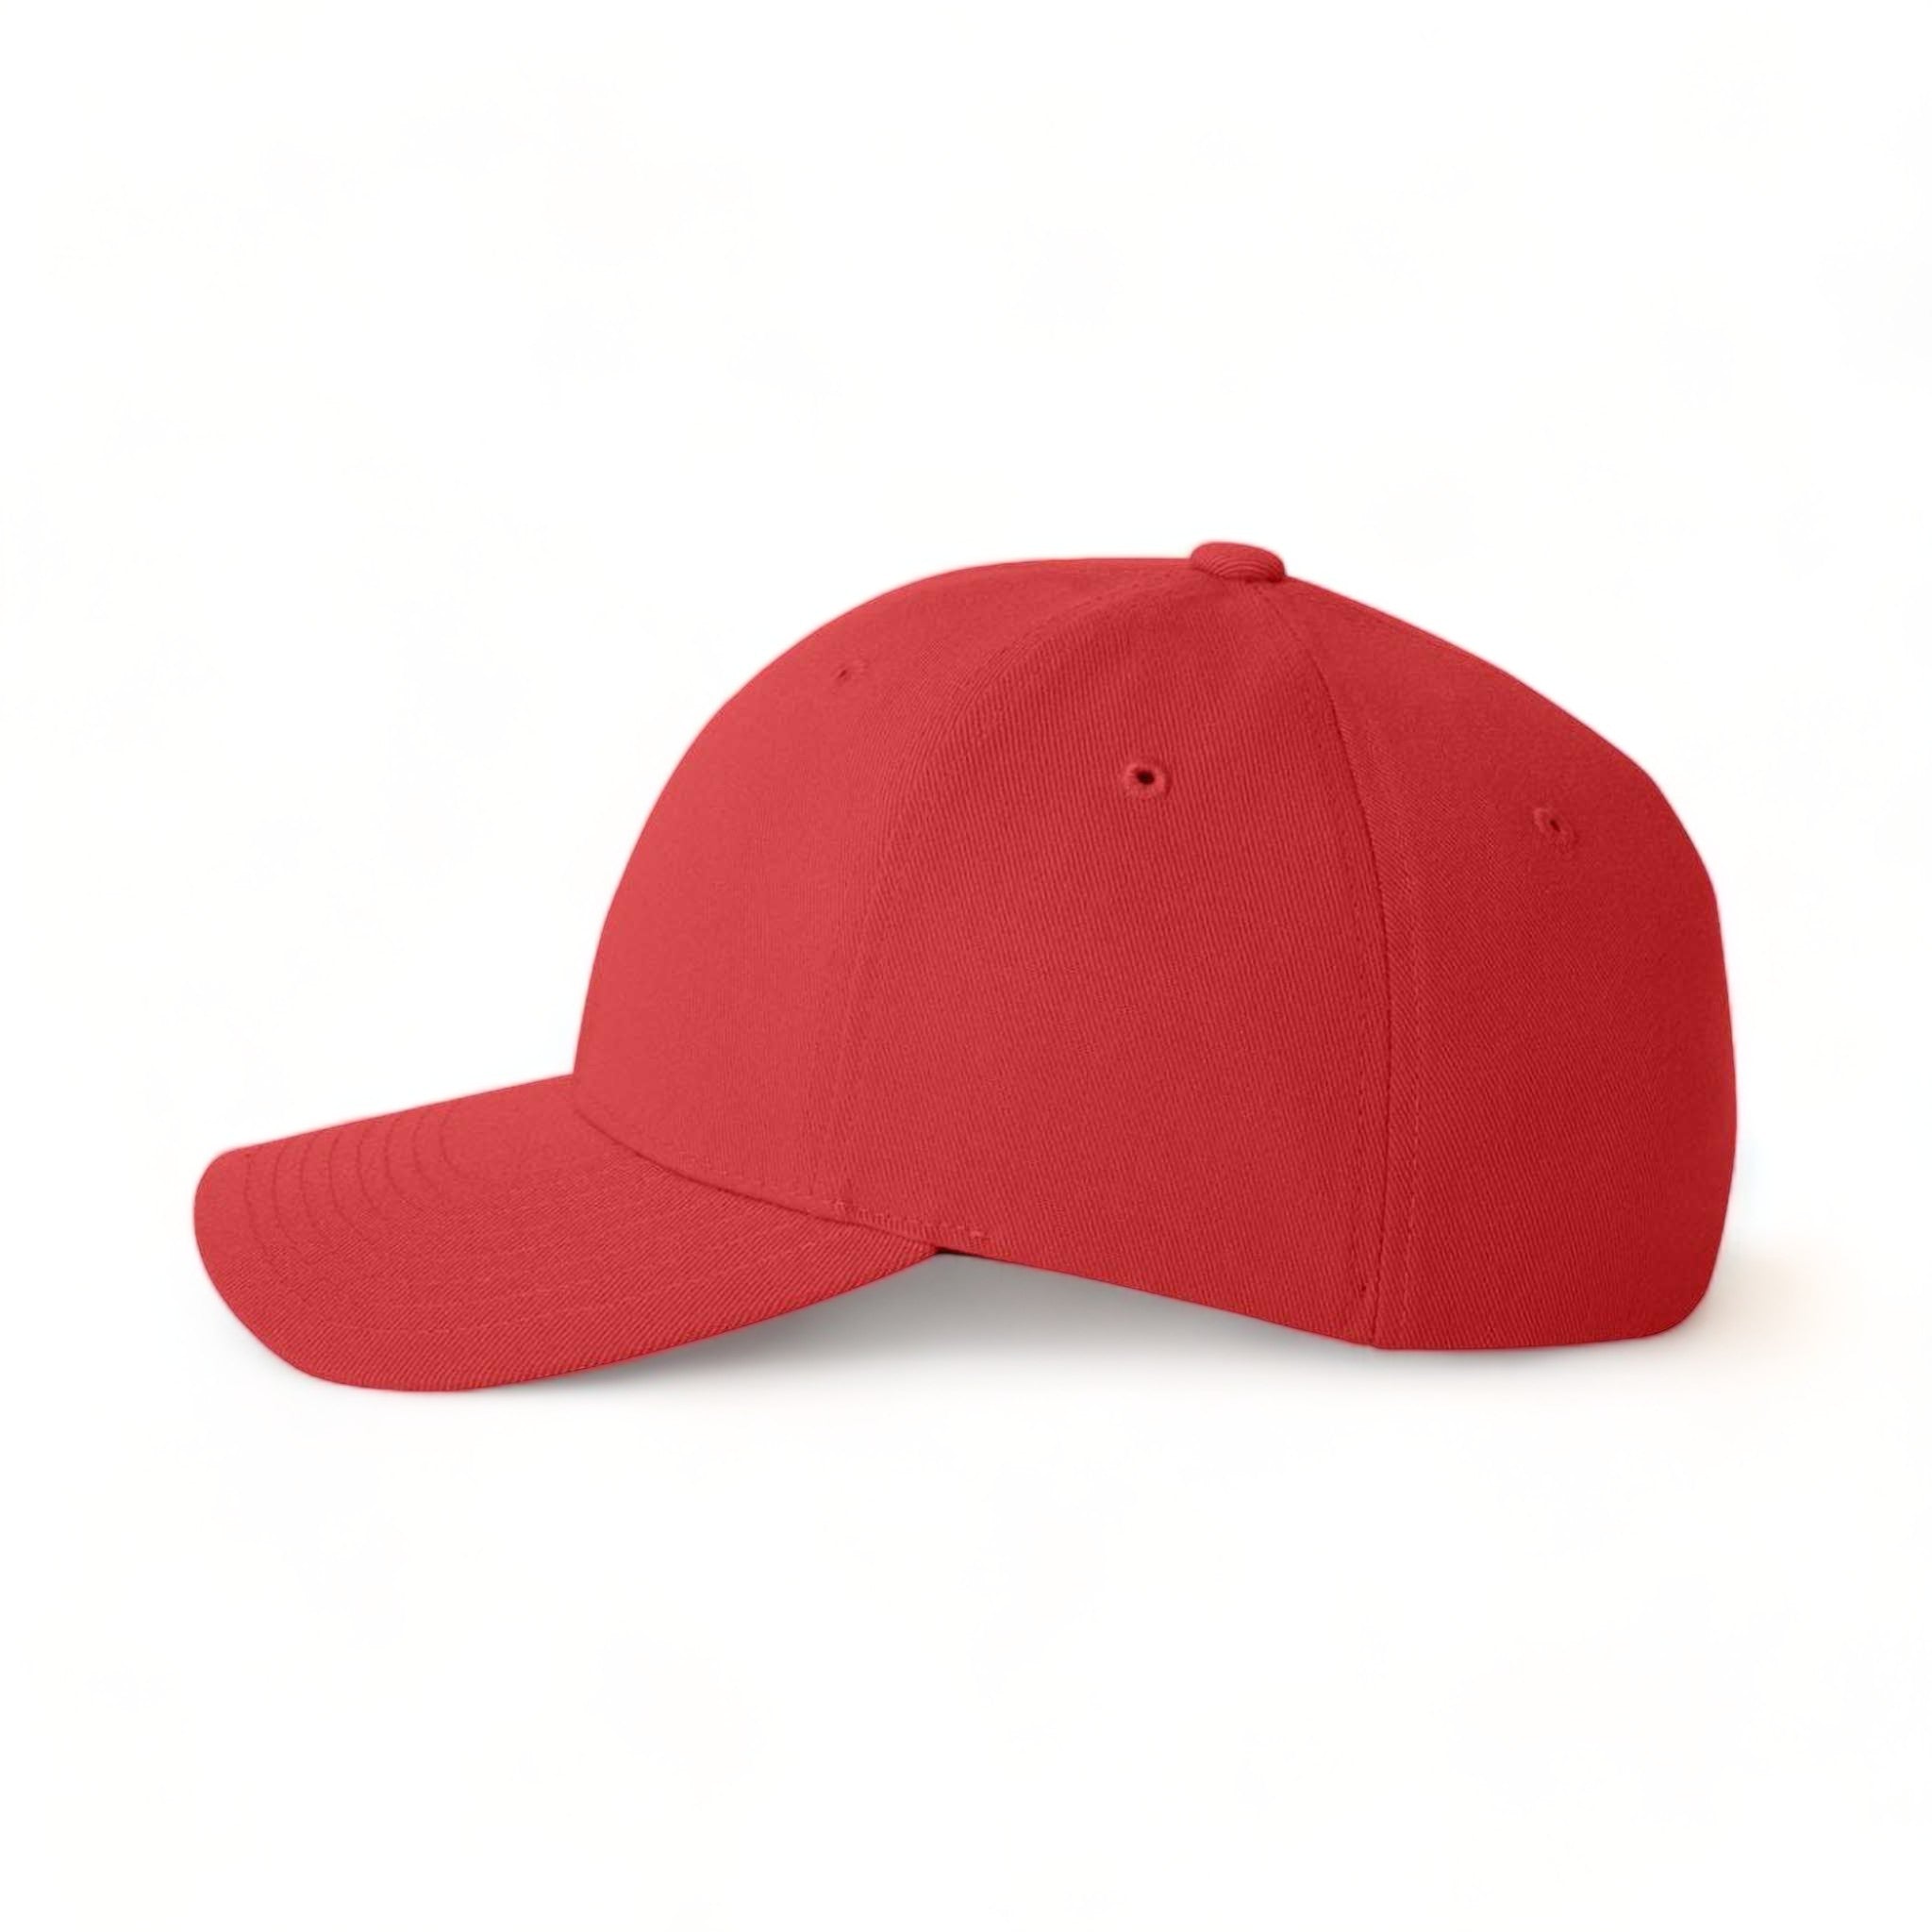 Side view of Flexfit 6580 custom hat in red